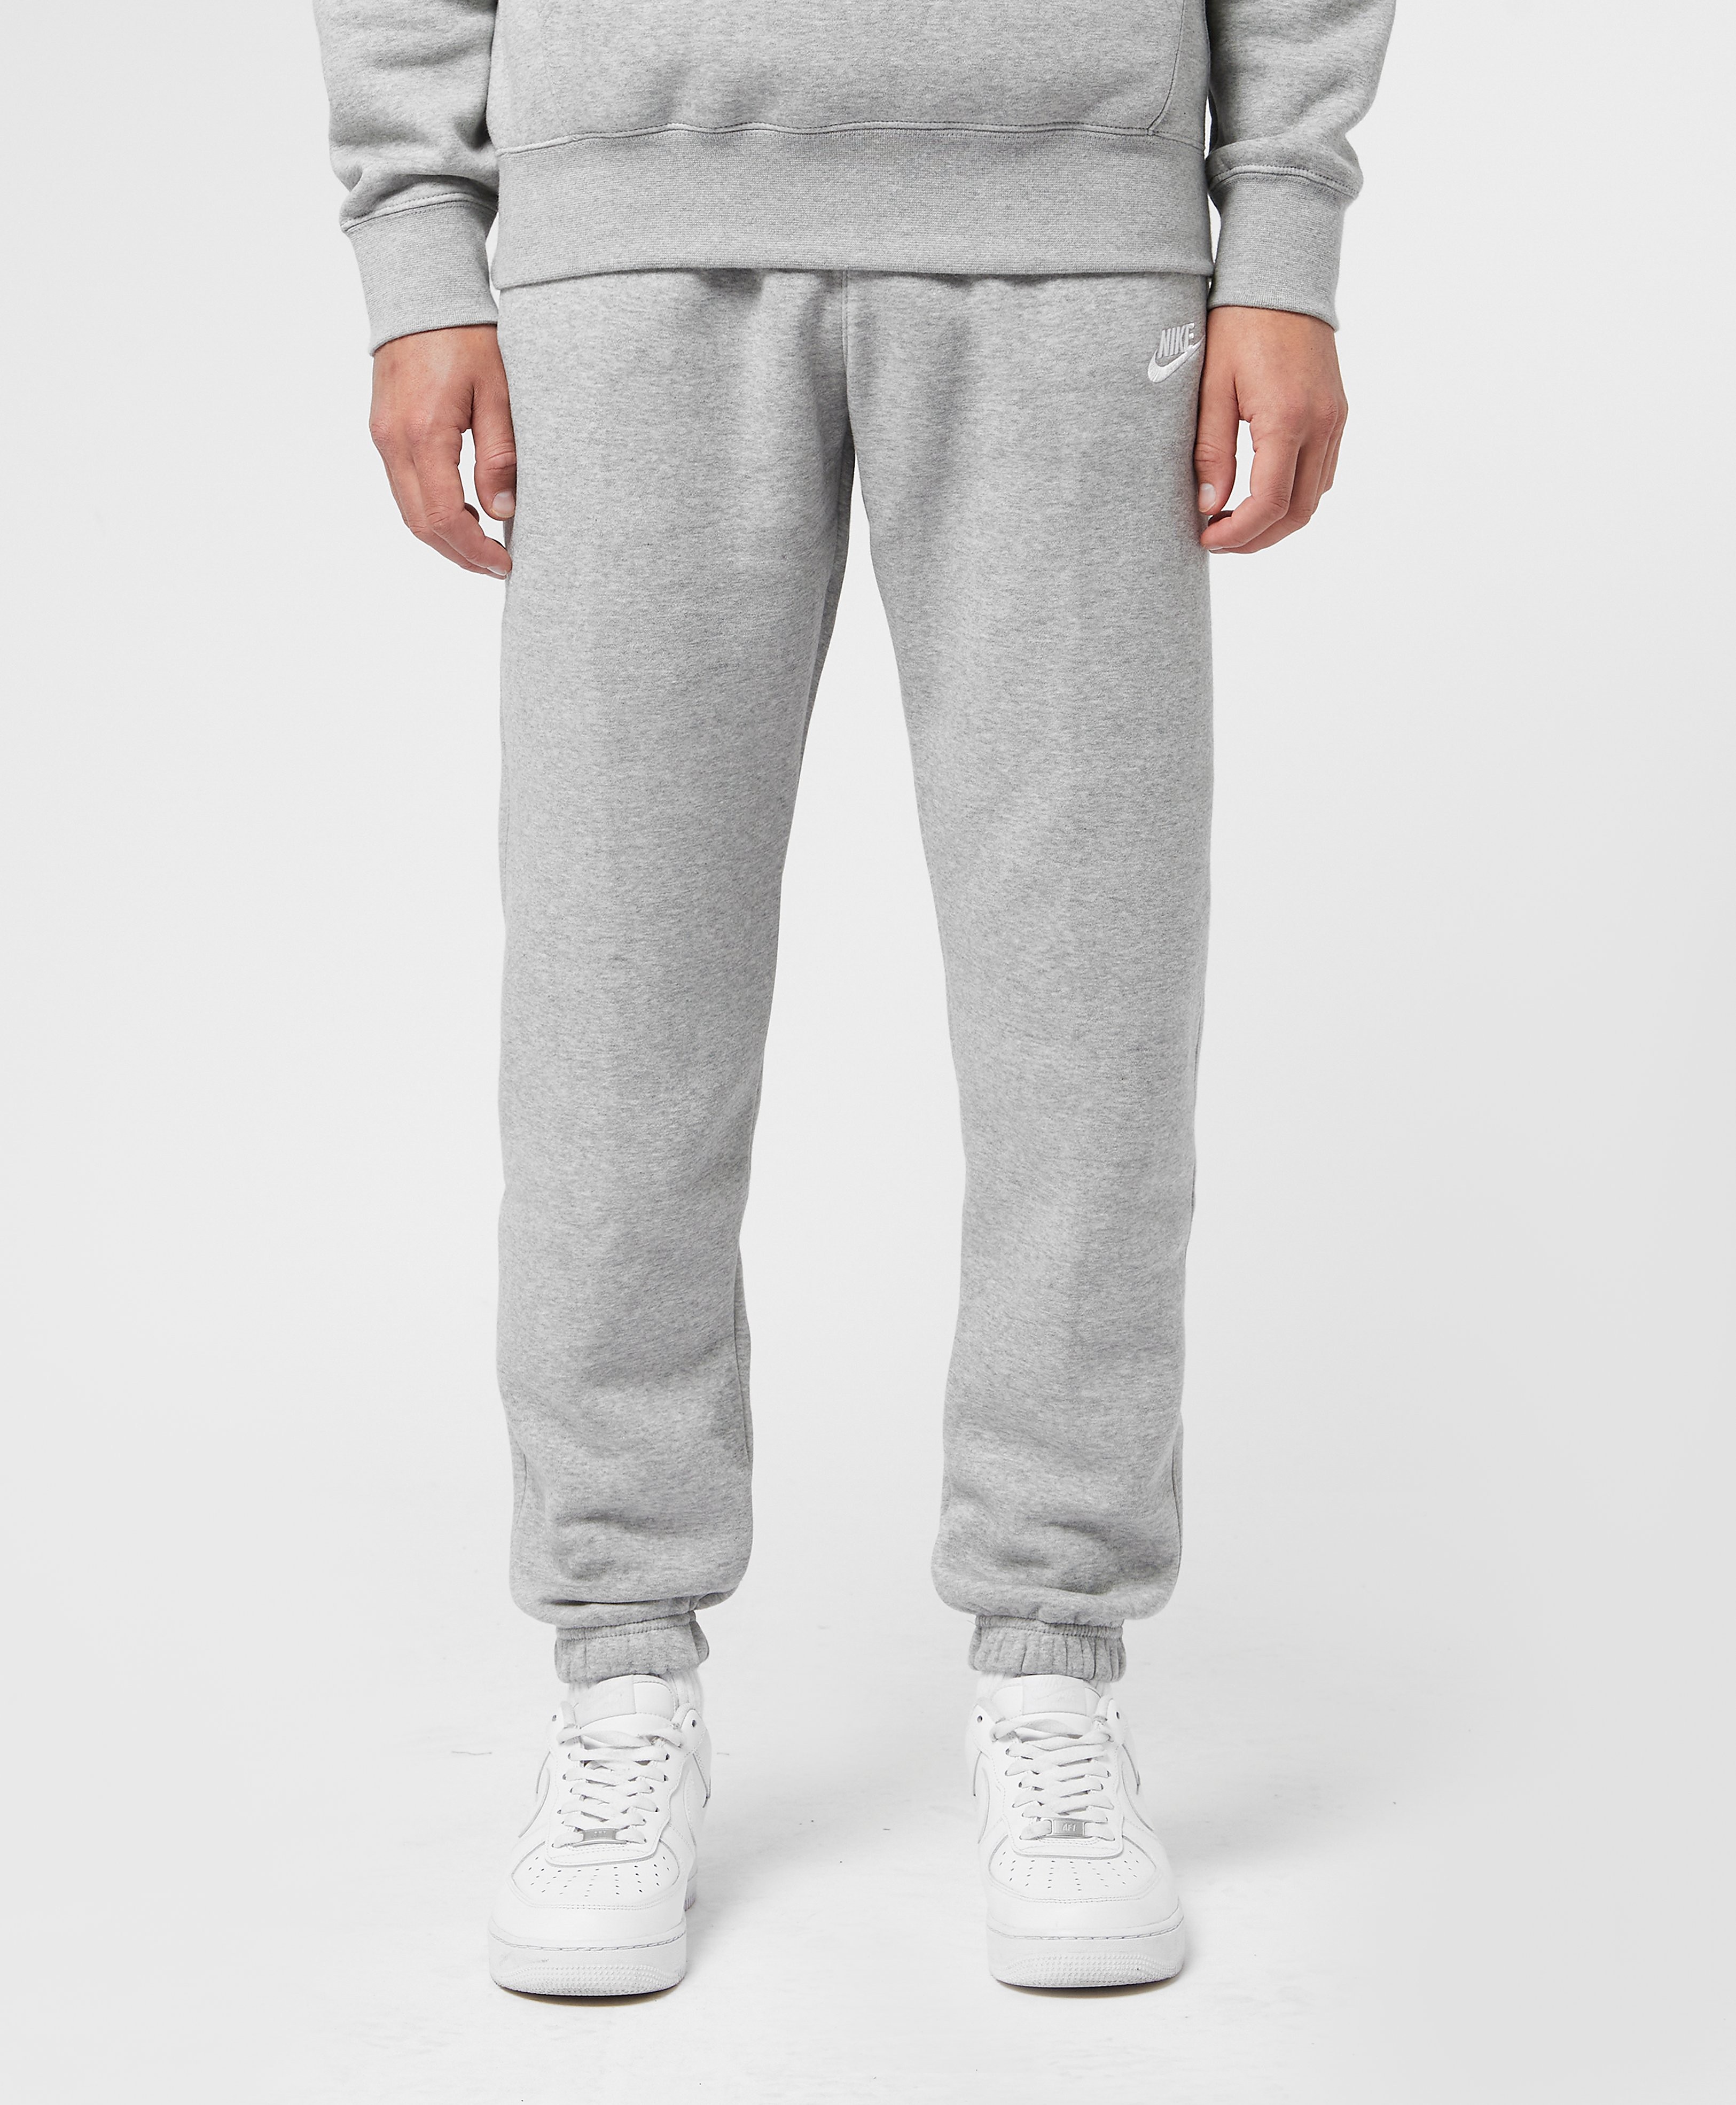 Nike Men's Foundation Fleece Joggers - Grey, Grey